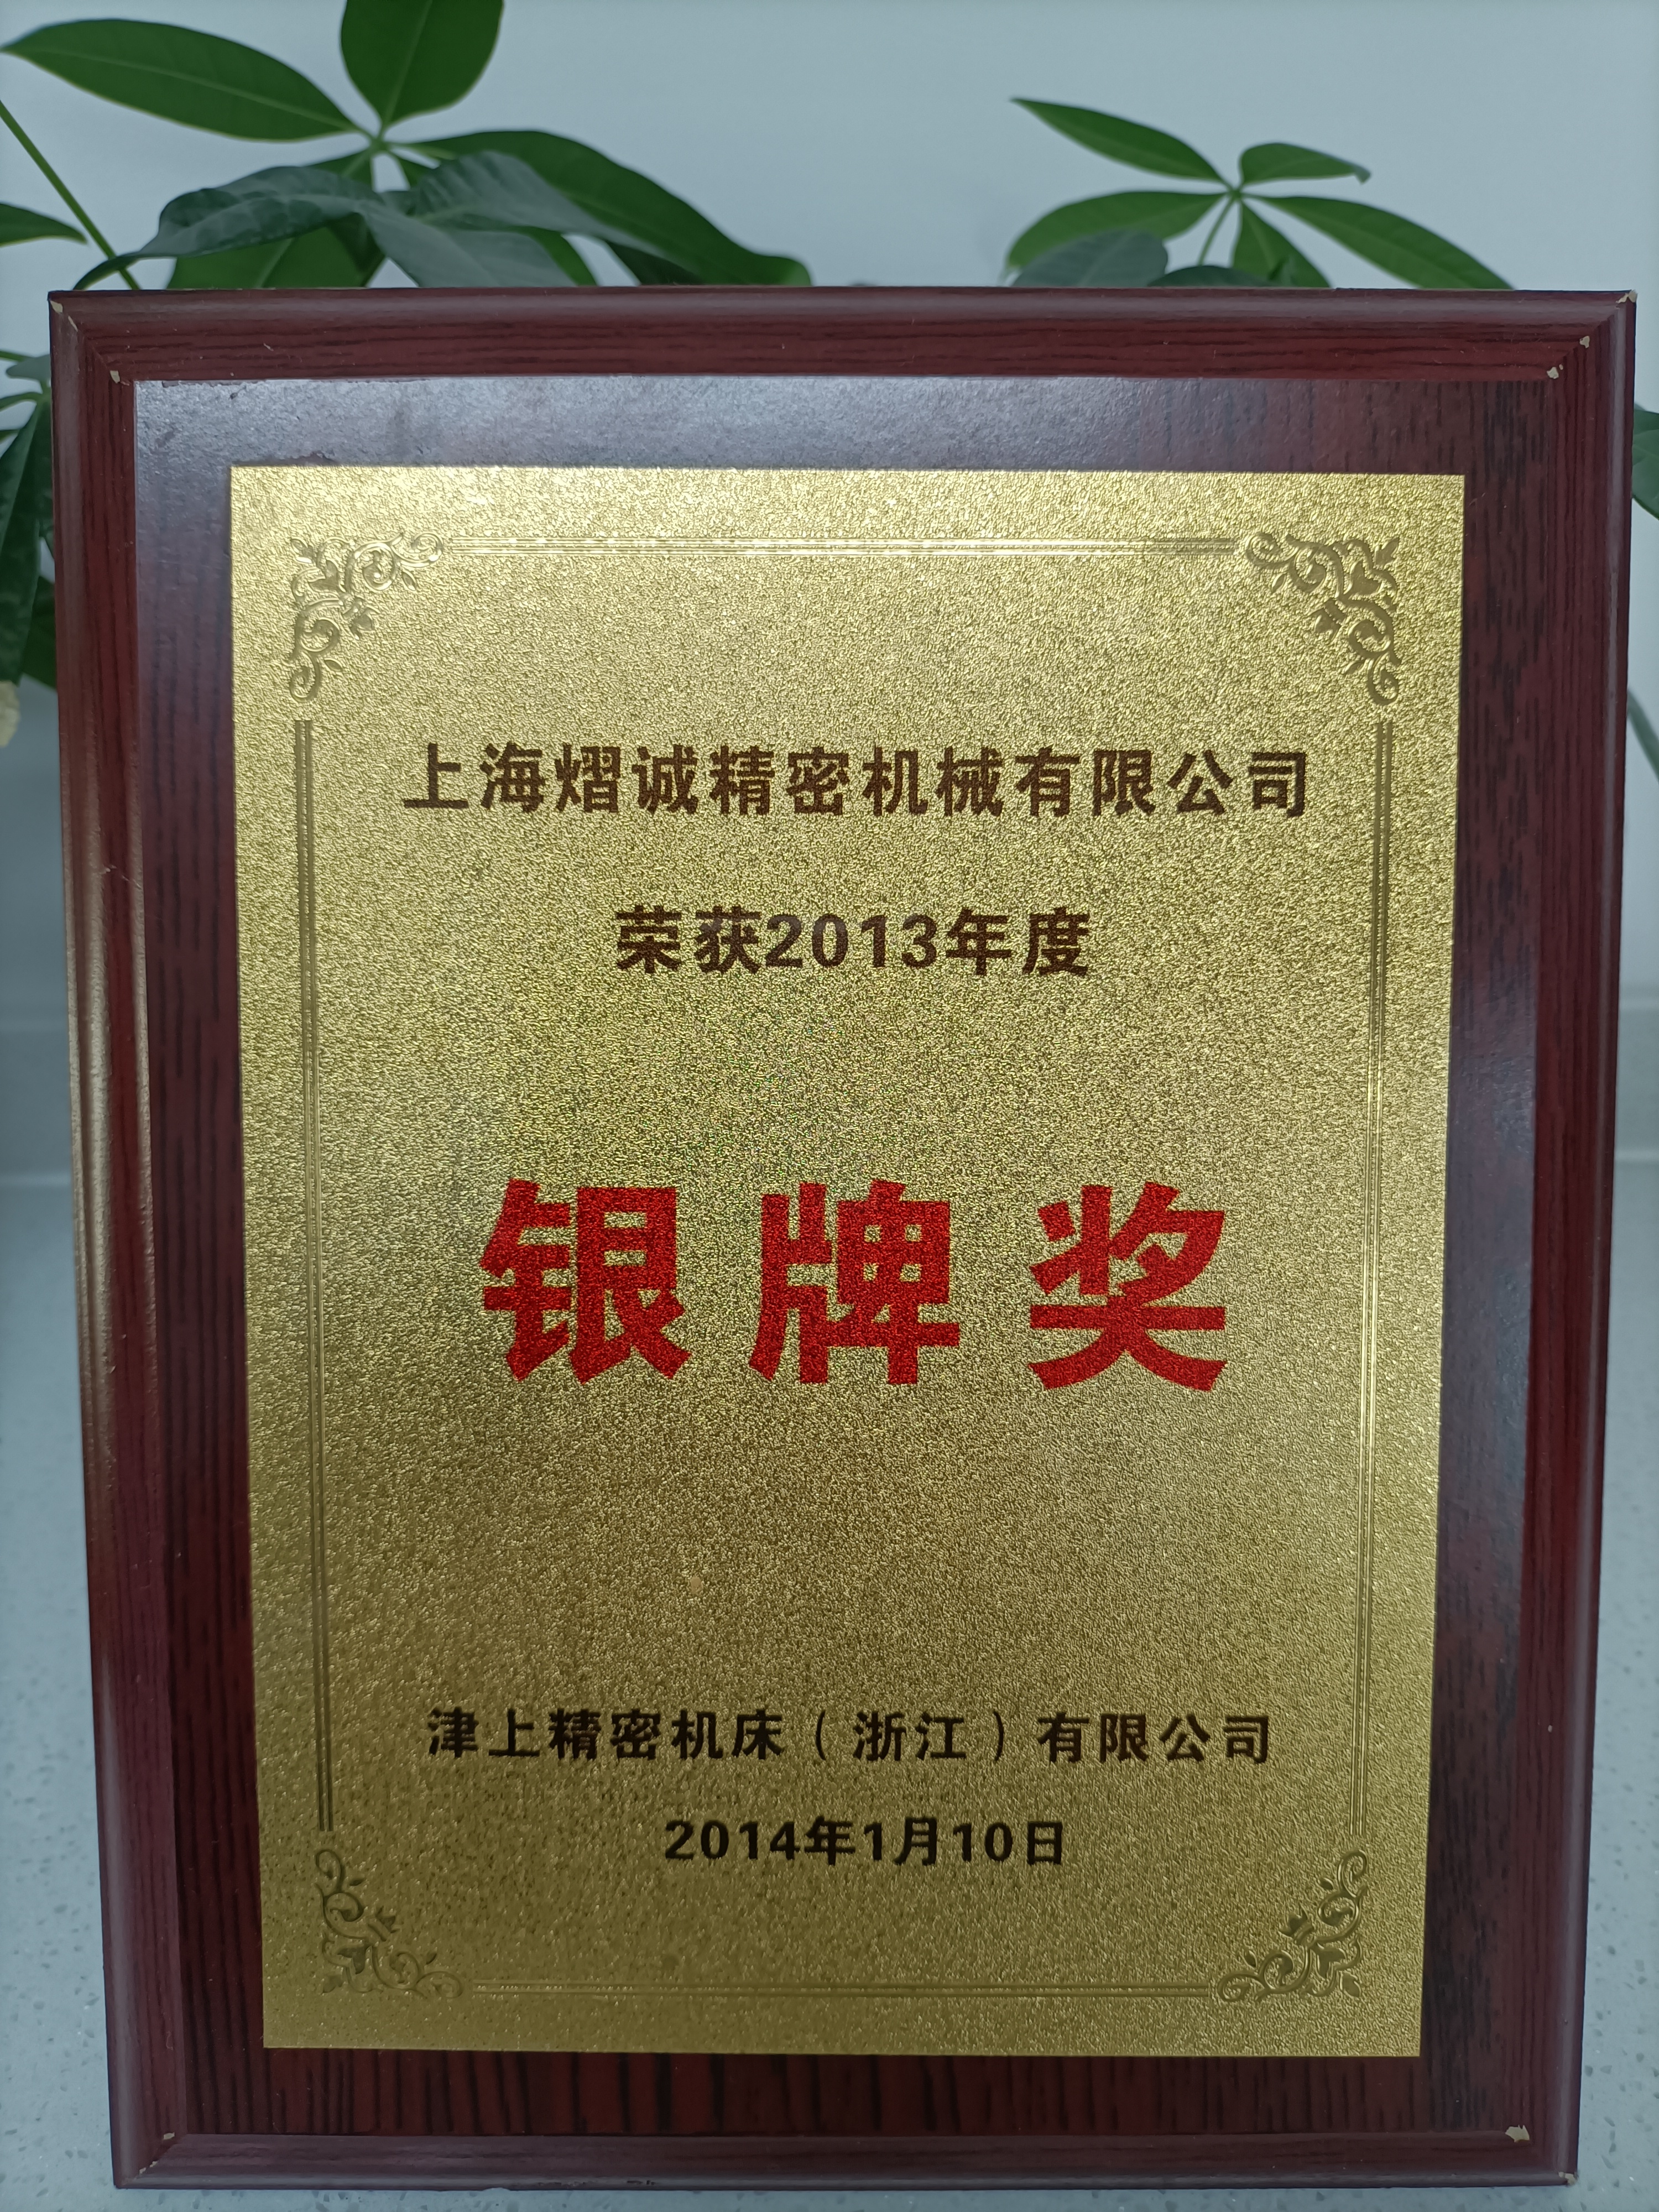 Won the 2013 Silver Medal Award